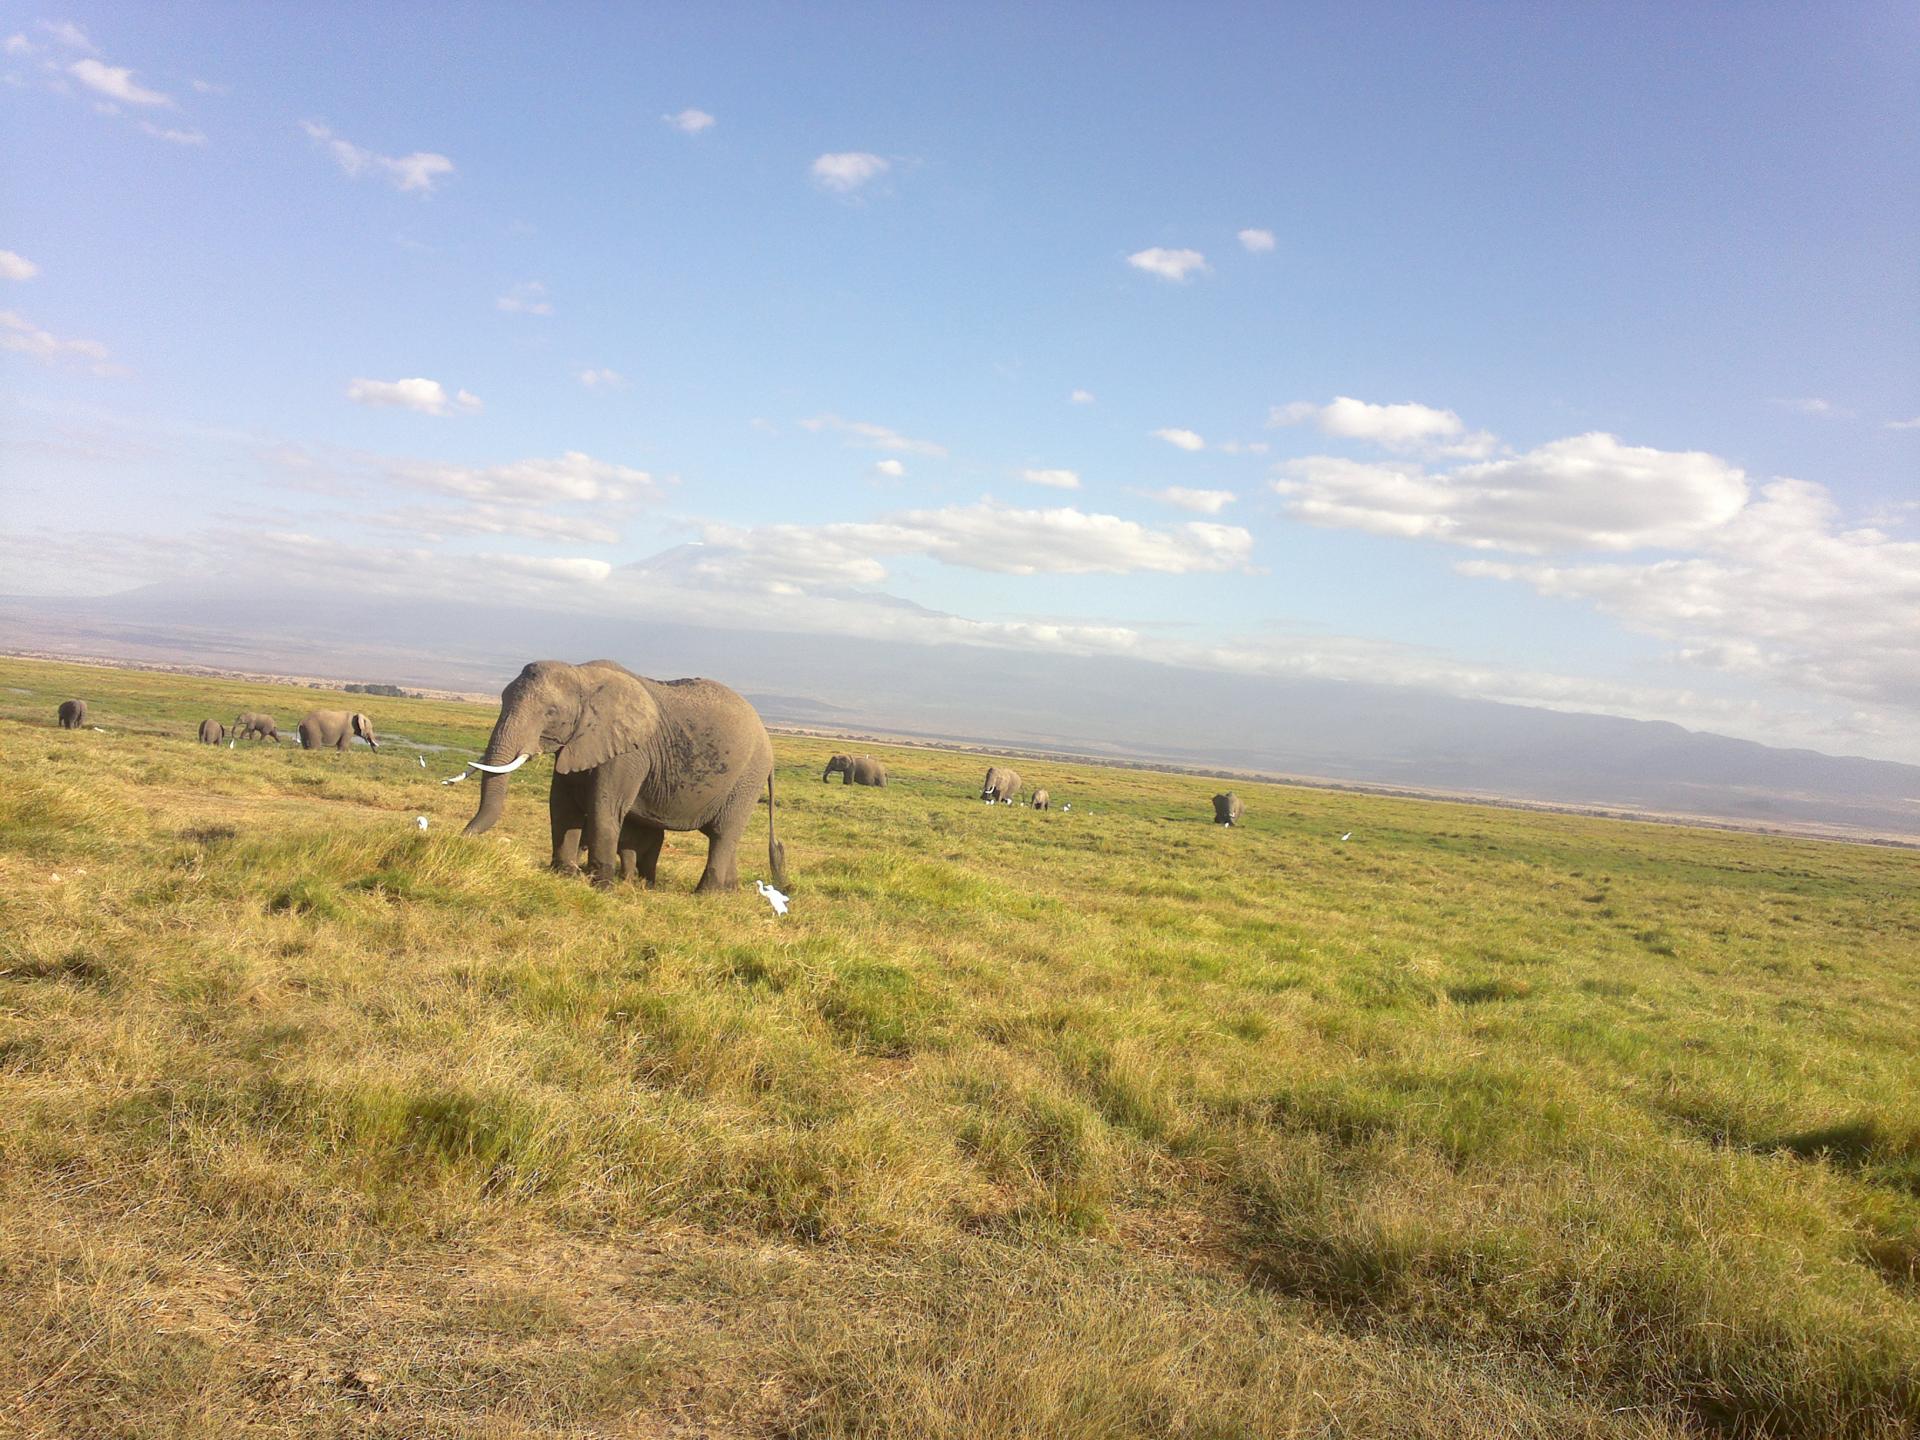  Kenya Budget Safaris, The Big Five,  Kenya Adventure Safaris Tours, Herd of Elephants, Mount Kilimanjaro, Active Adventures, YHA Kenya Travel, Amboseli National Park, African Budget Safari Tours, Africa Safaris.